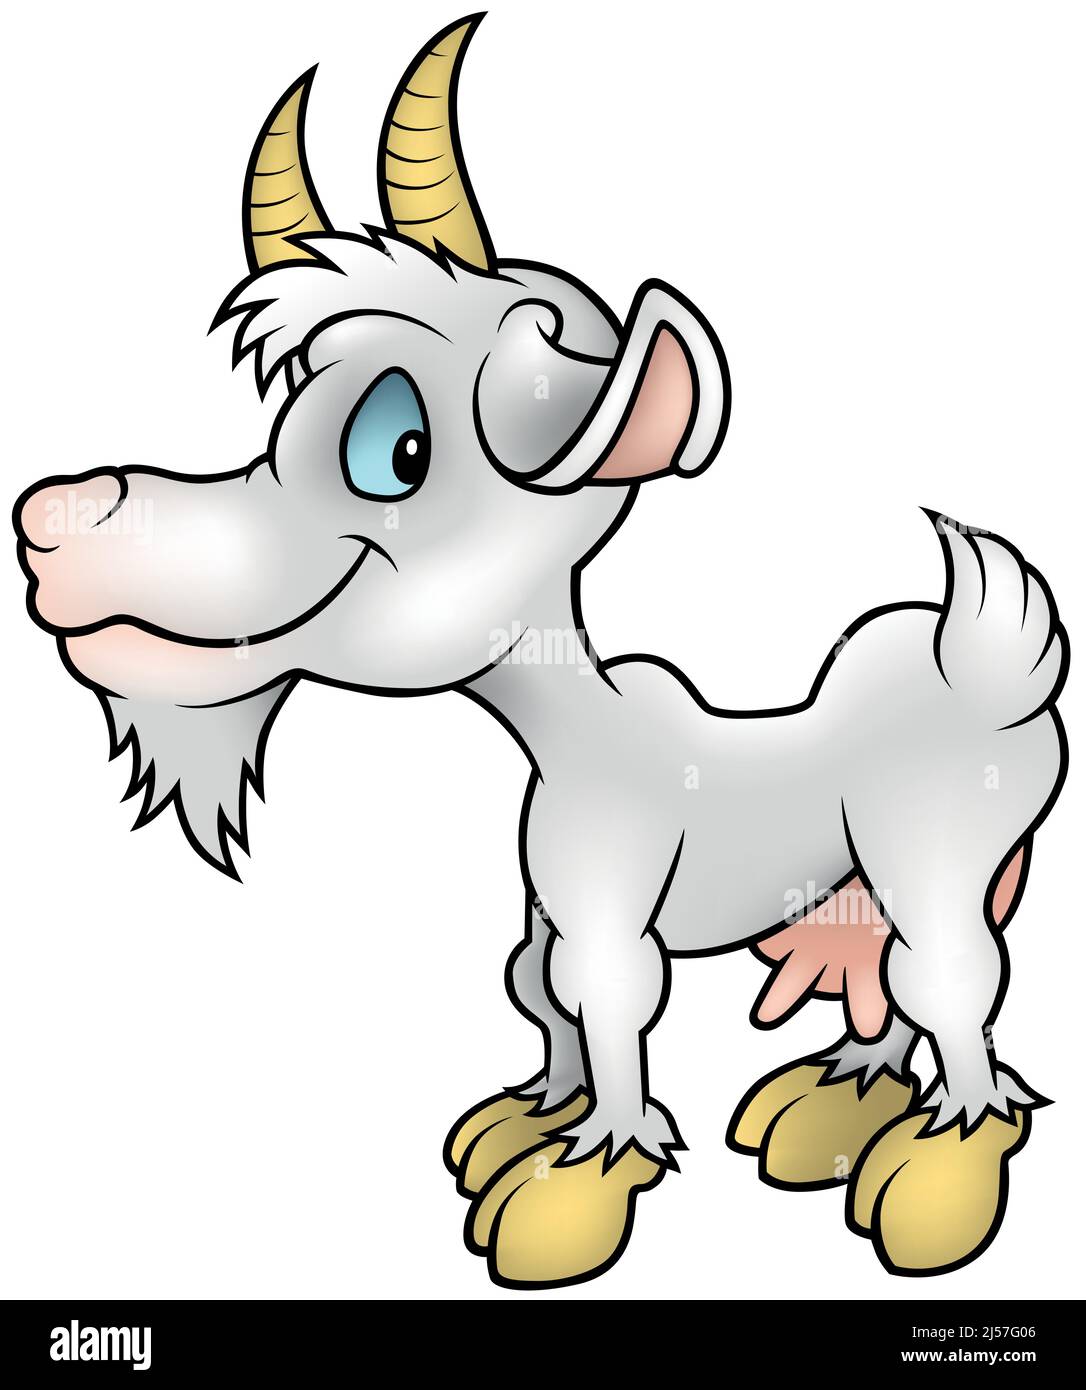 White Horned Goat with Blue Eyes Stock Vector Image & Art - Alamy